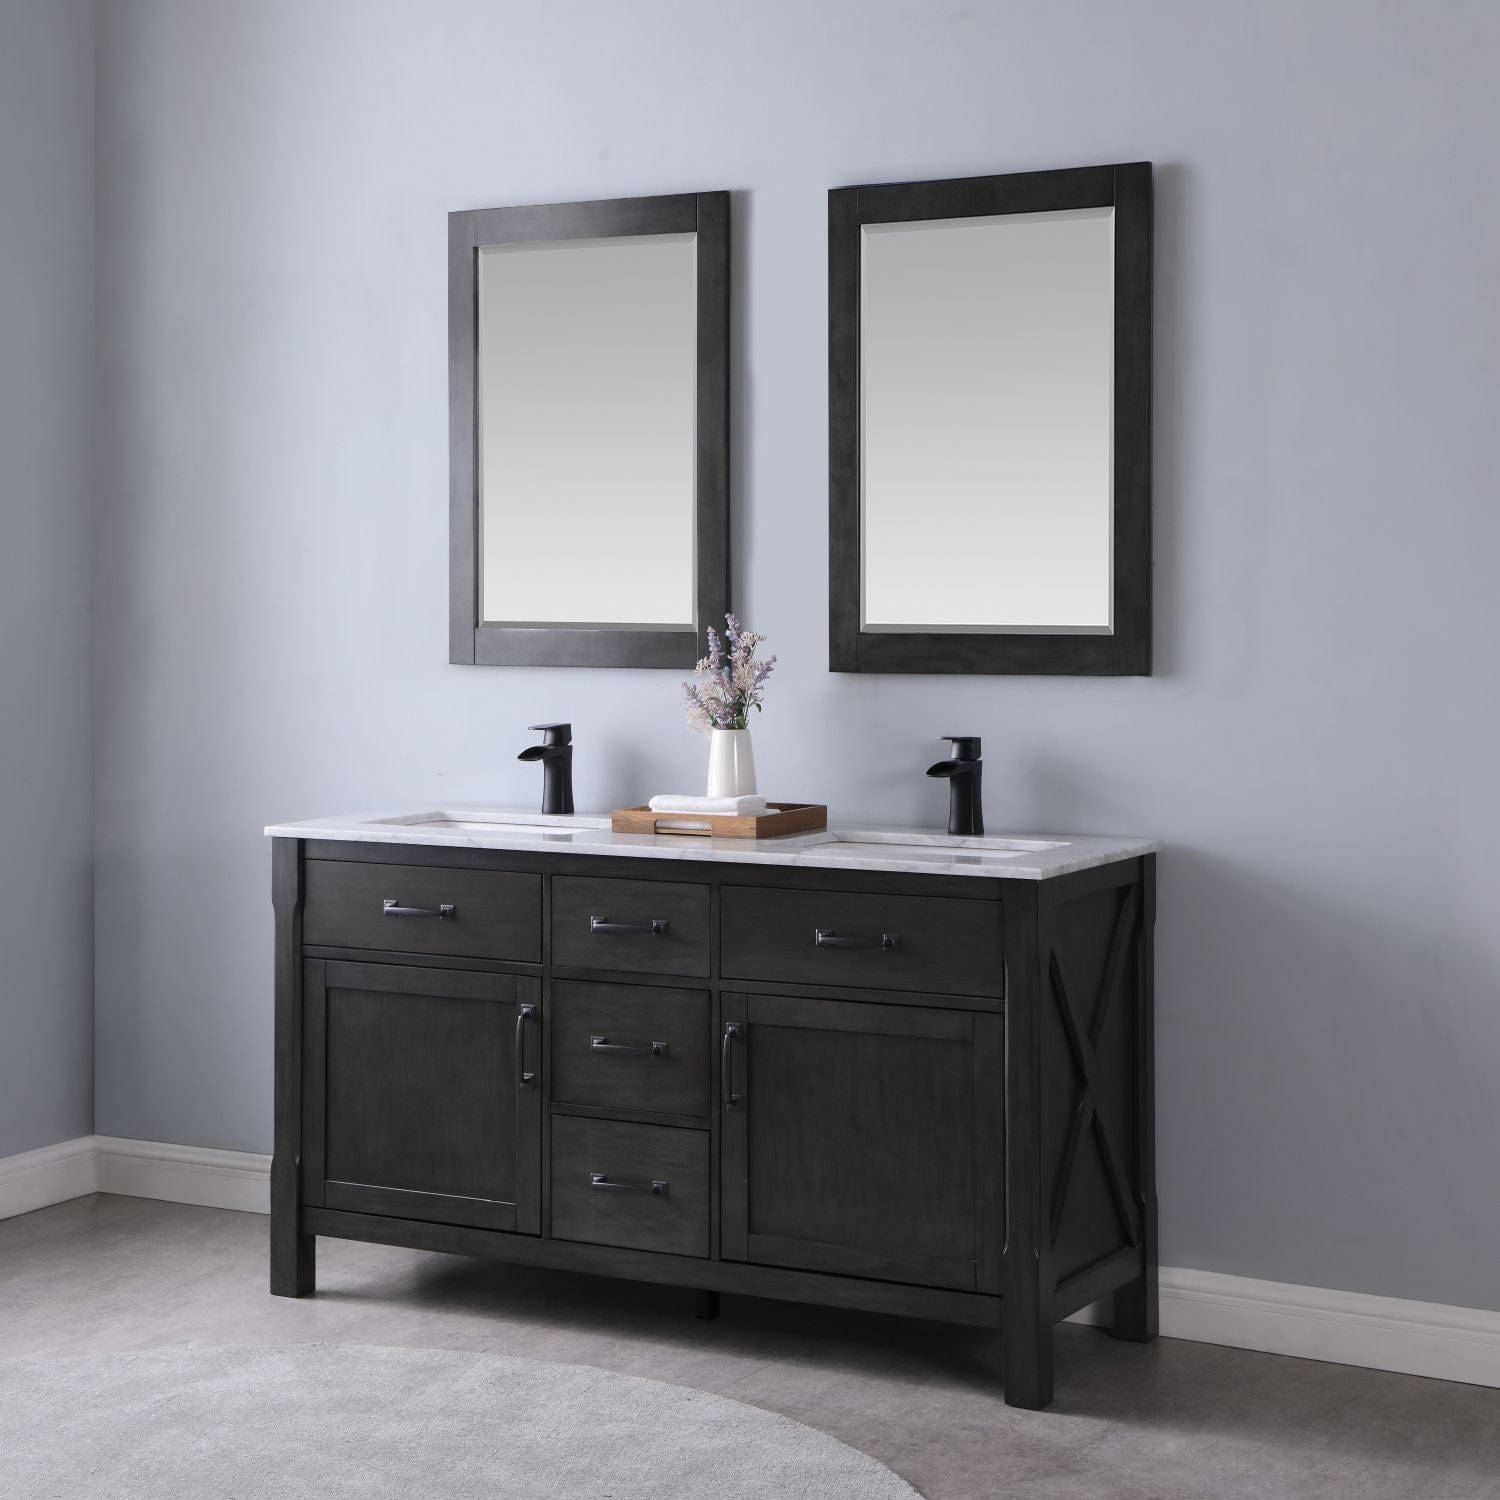 Altair Maribella 30" Single Bathroom Vanity Set in Rust Black and Carrara White Marble Countertop with Mirror 535030-RL-CA - Molaix631112970235Vanity535030-RL-CA